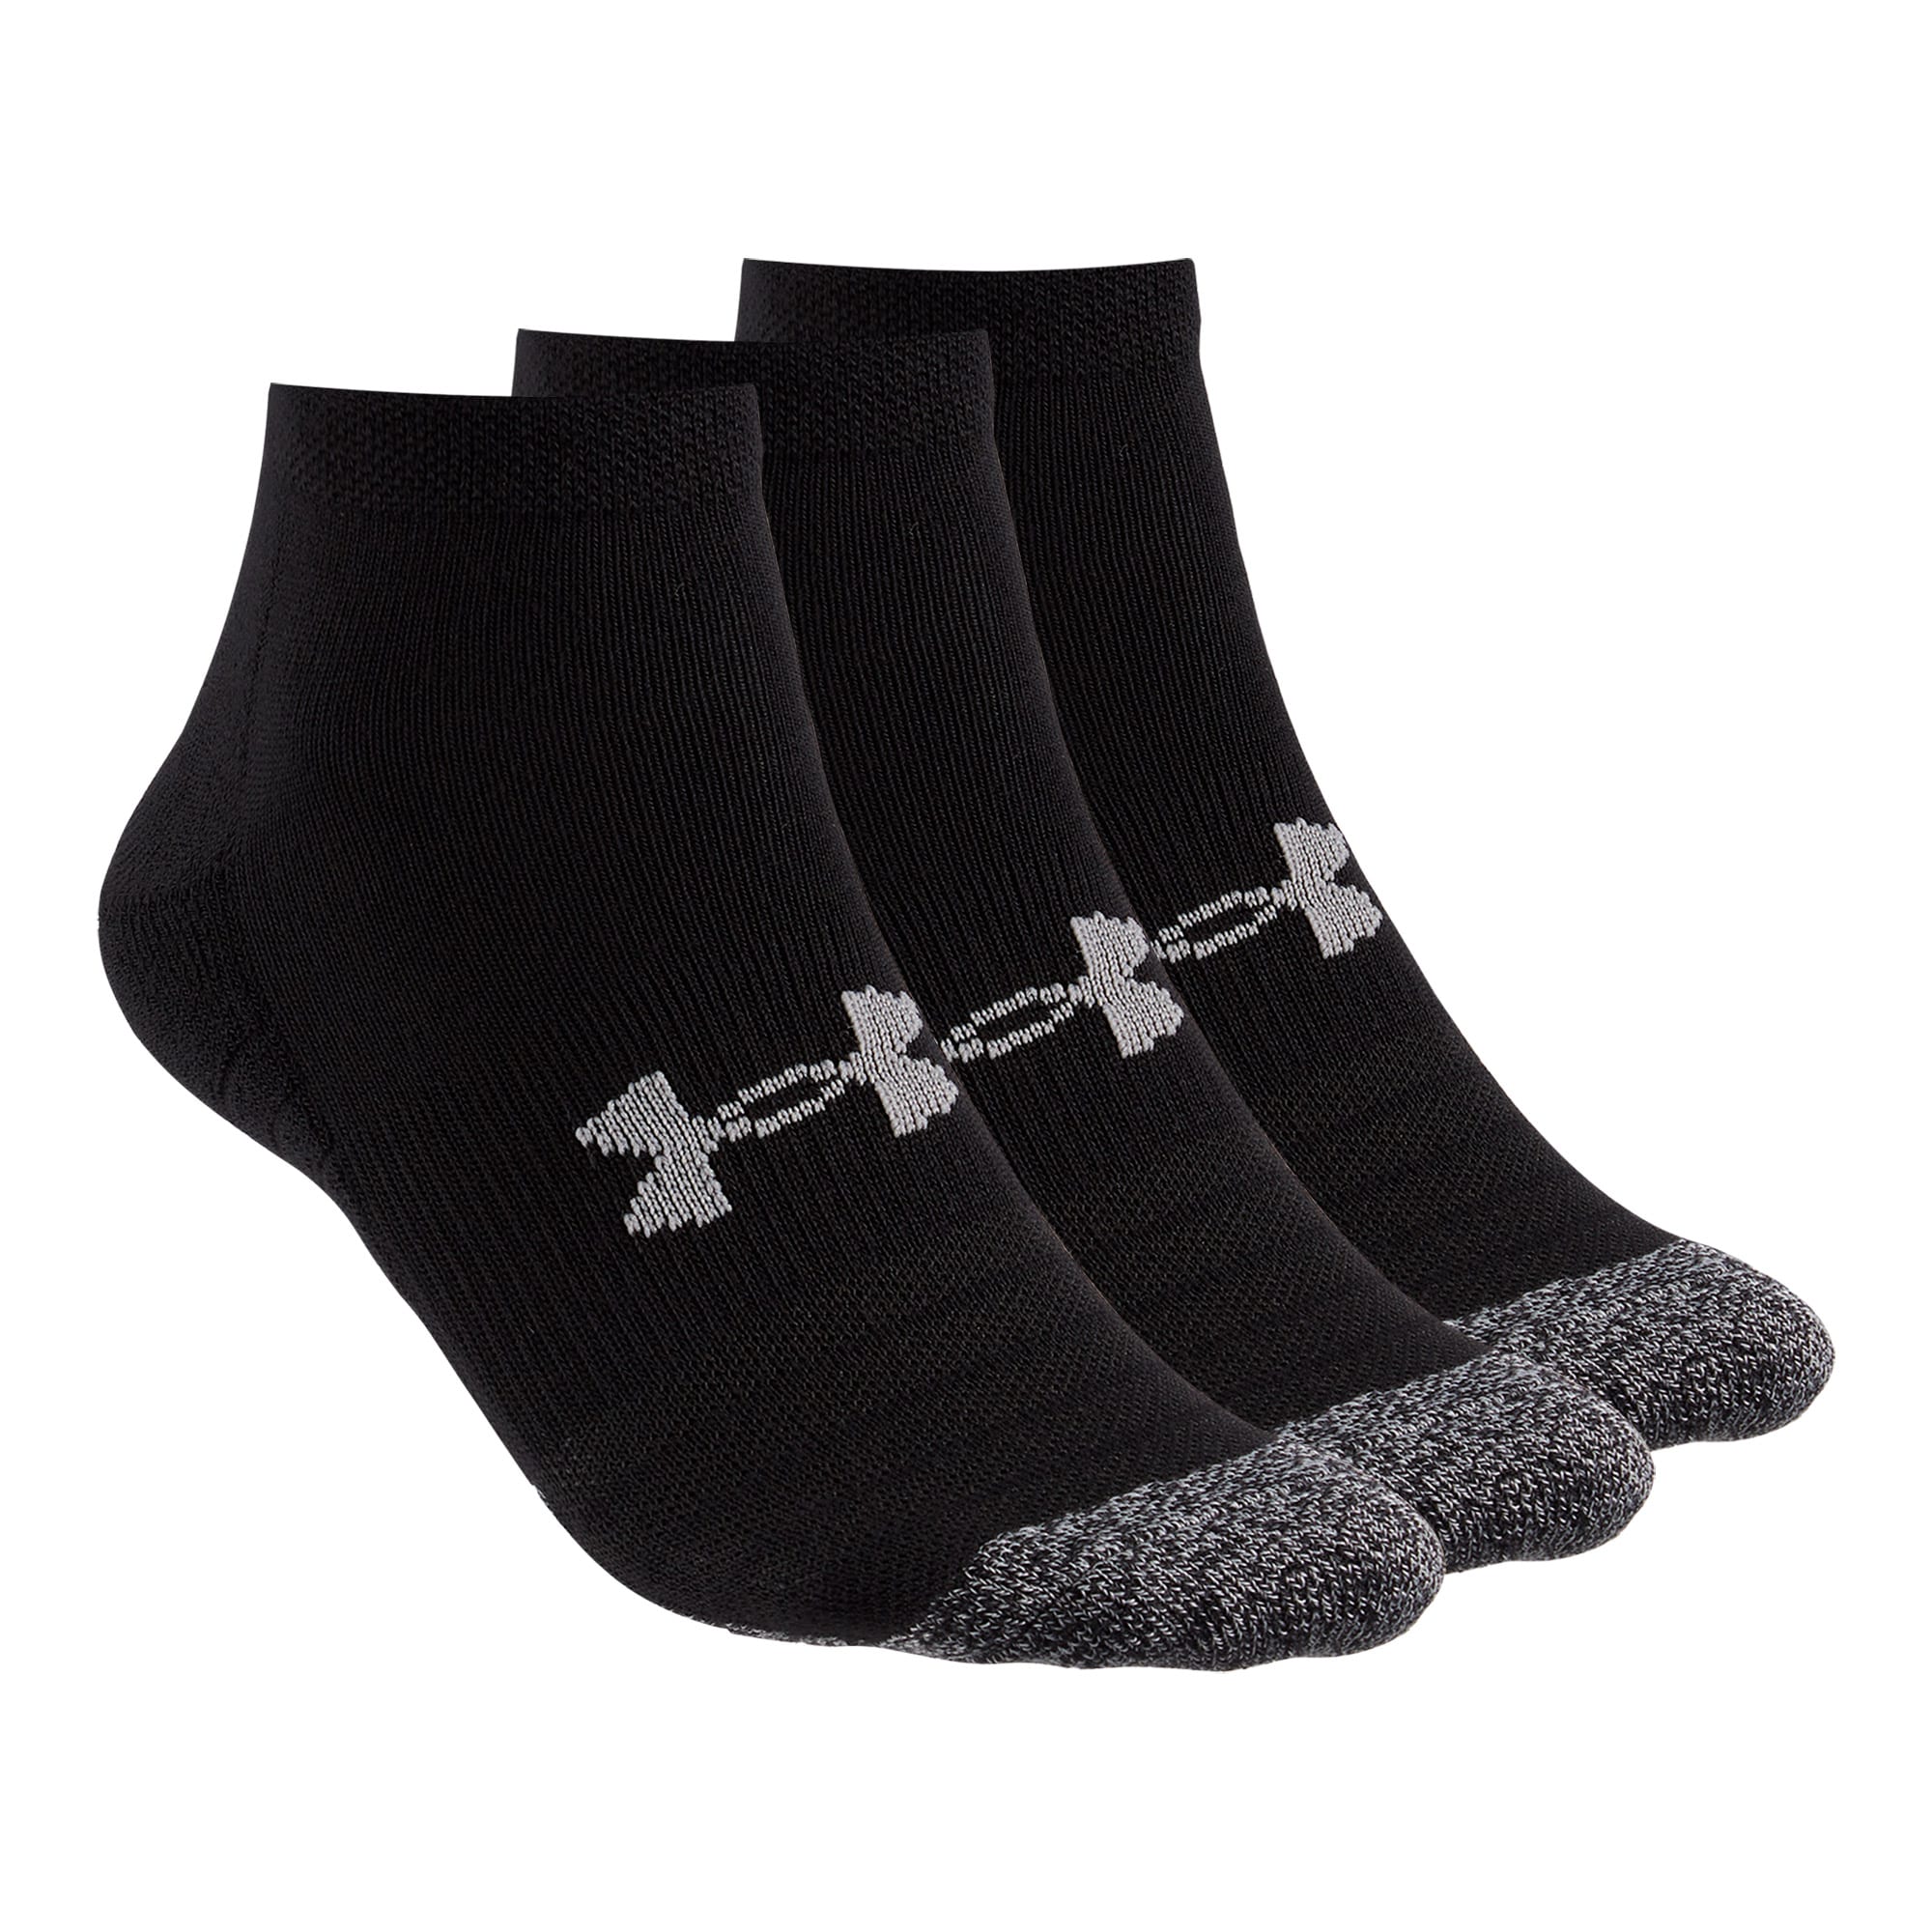 Purchase the Under Armour Socks Heatgear Locut black by ASMC